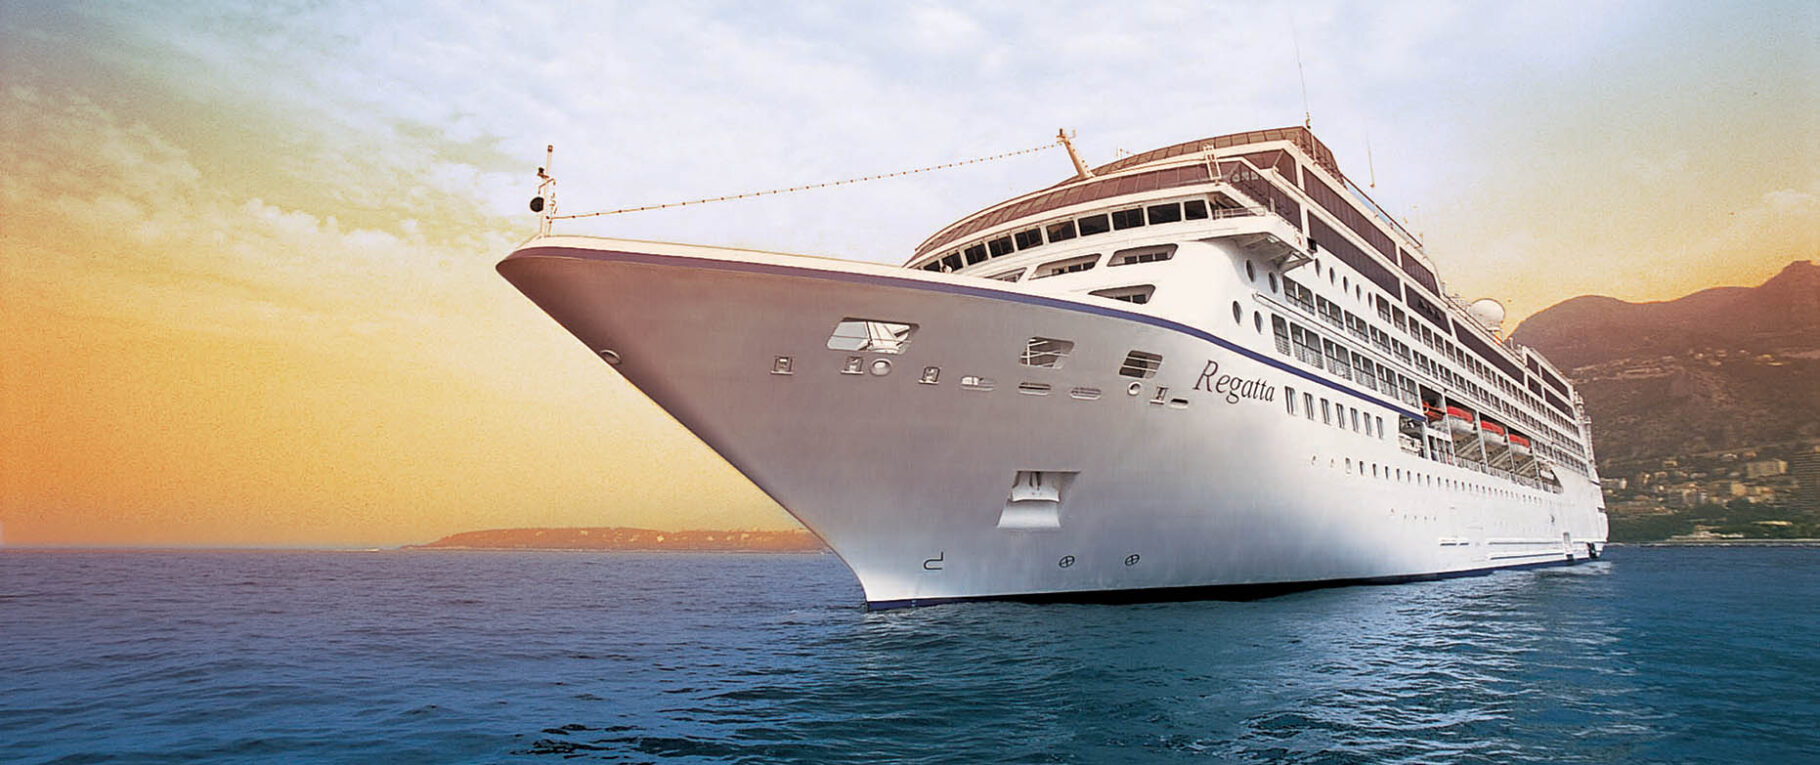 The Oceania Cruises Regatta ship on the water